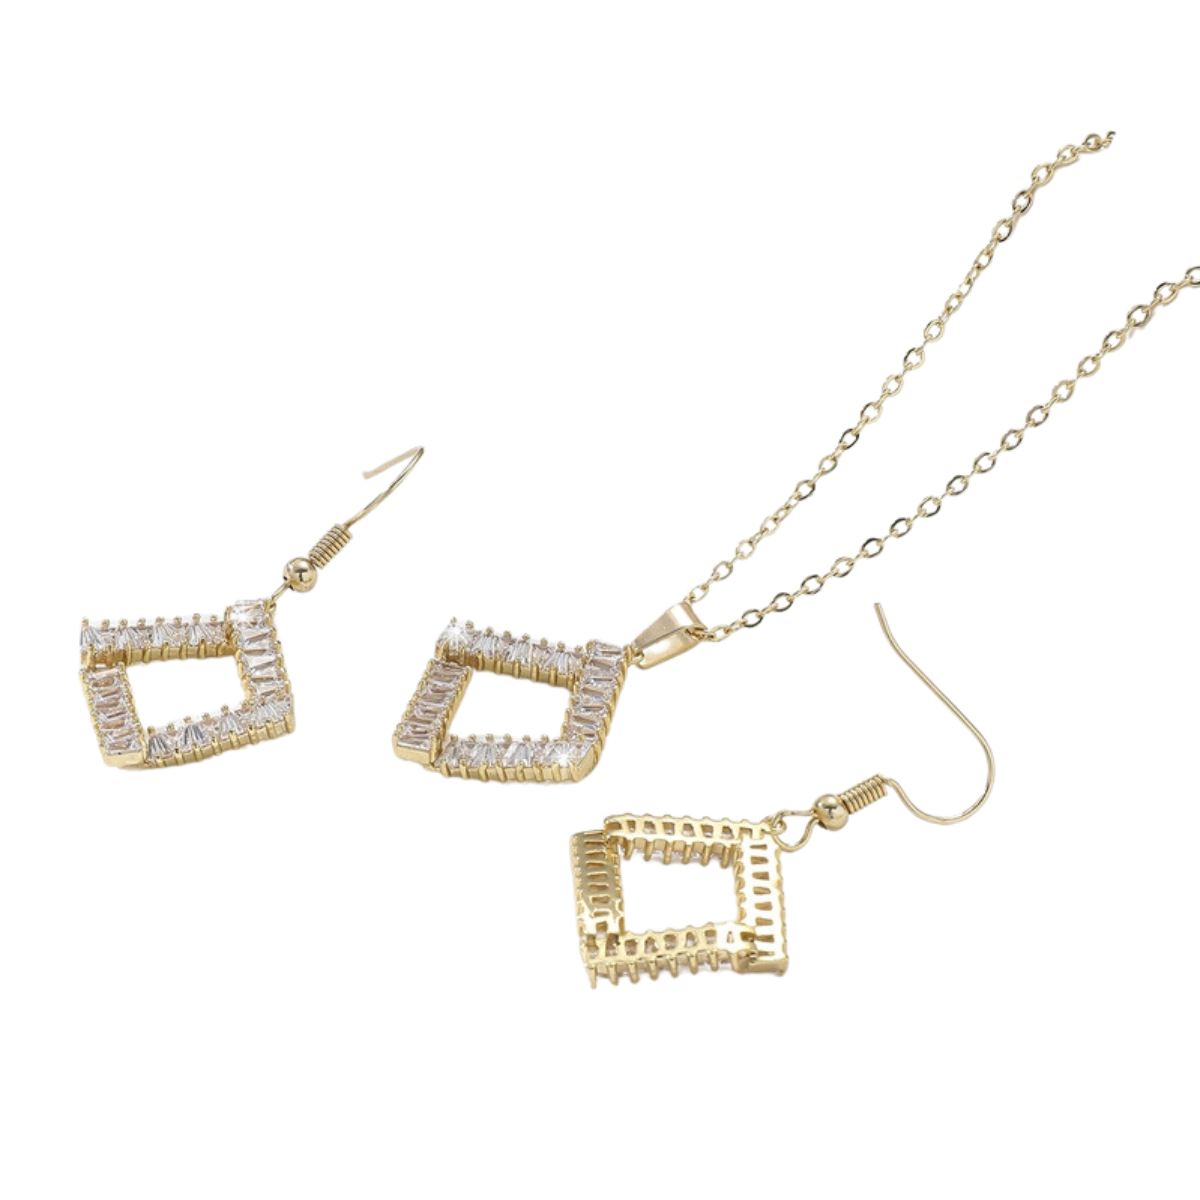 10pcs - Gold Tone Crystal Square Shape Necklace and Earrings Set|GCJ421|UK seller